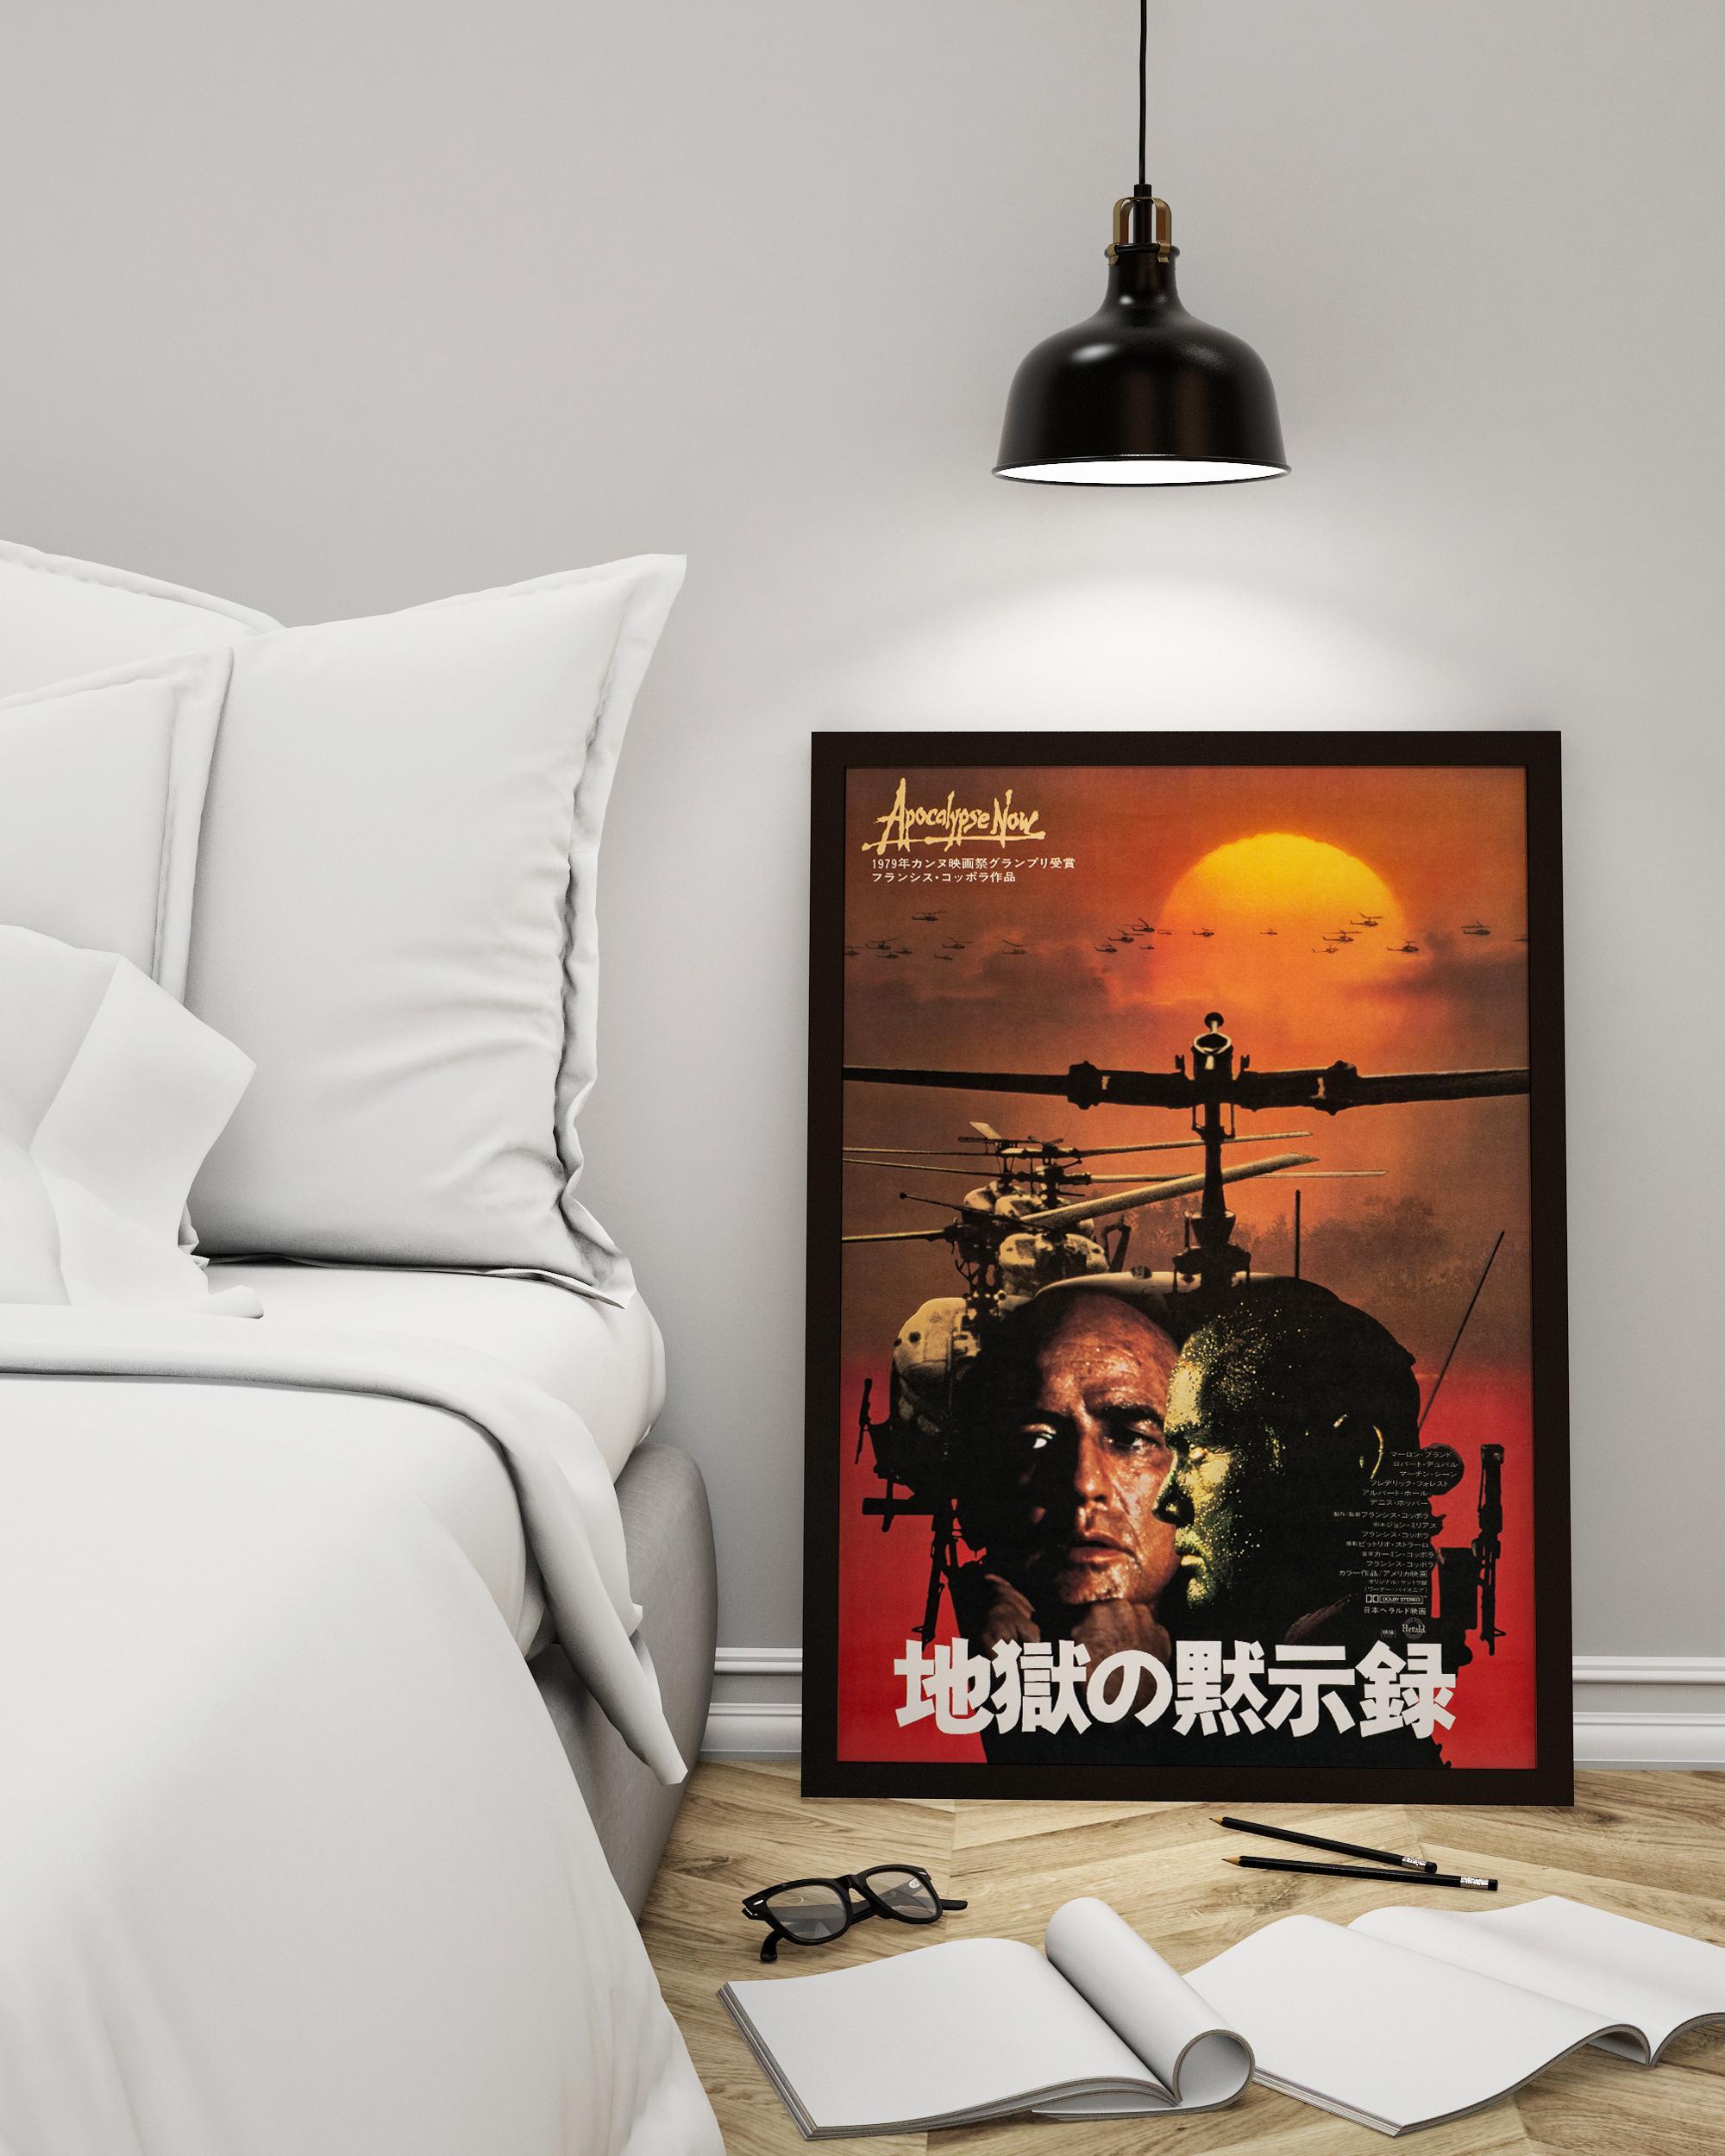 'Apocalypse Now' Original Vintage Japanese B2 Movie Poster, 1980 - Post-War Print by Bob Peak